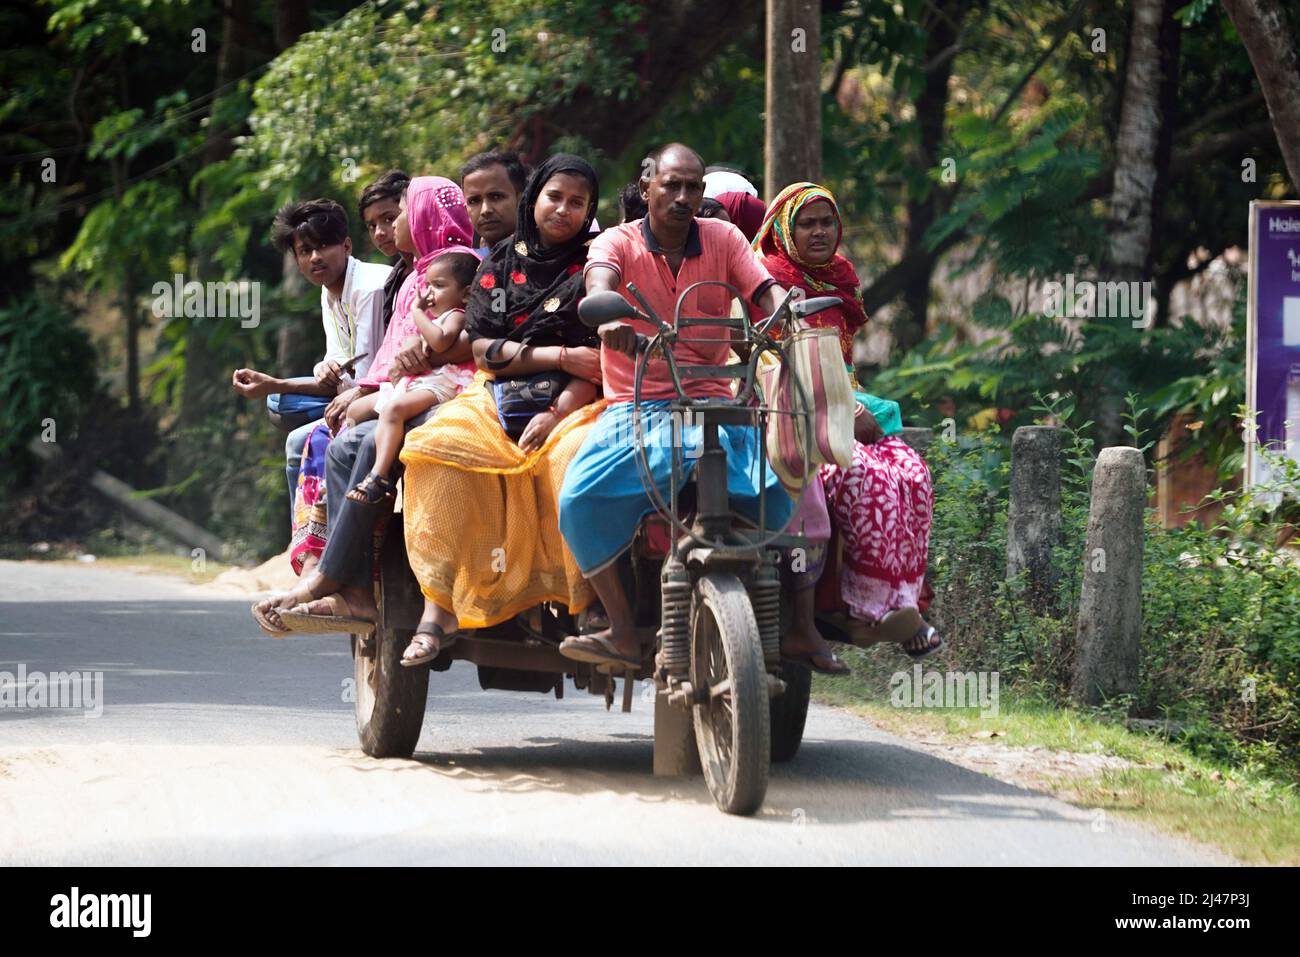 Passengers on a motor tricycle, street scene in Baruipur near Kolkata, India Stock Photo